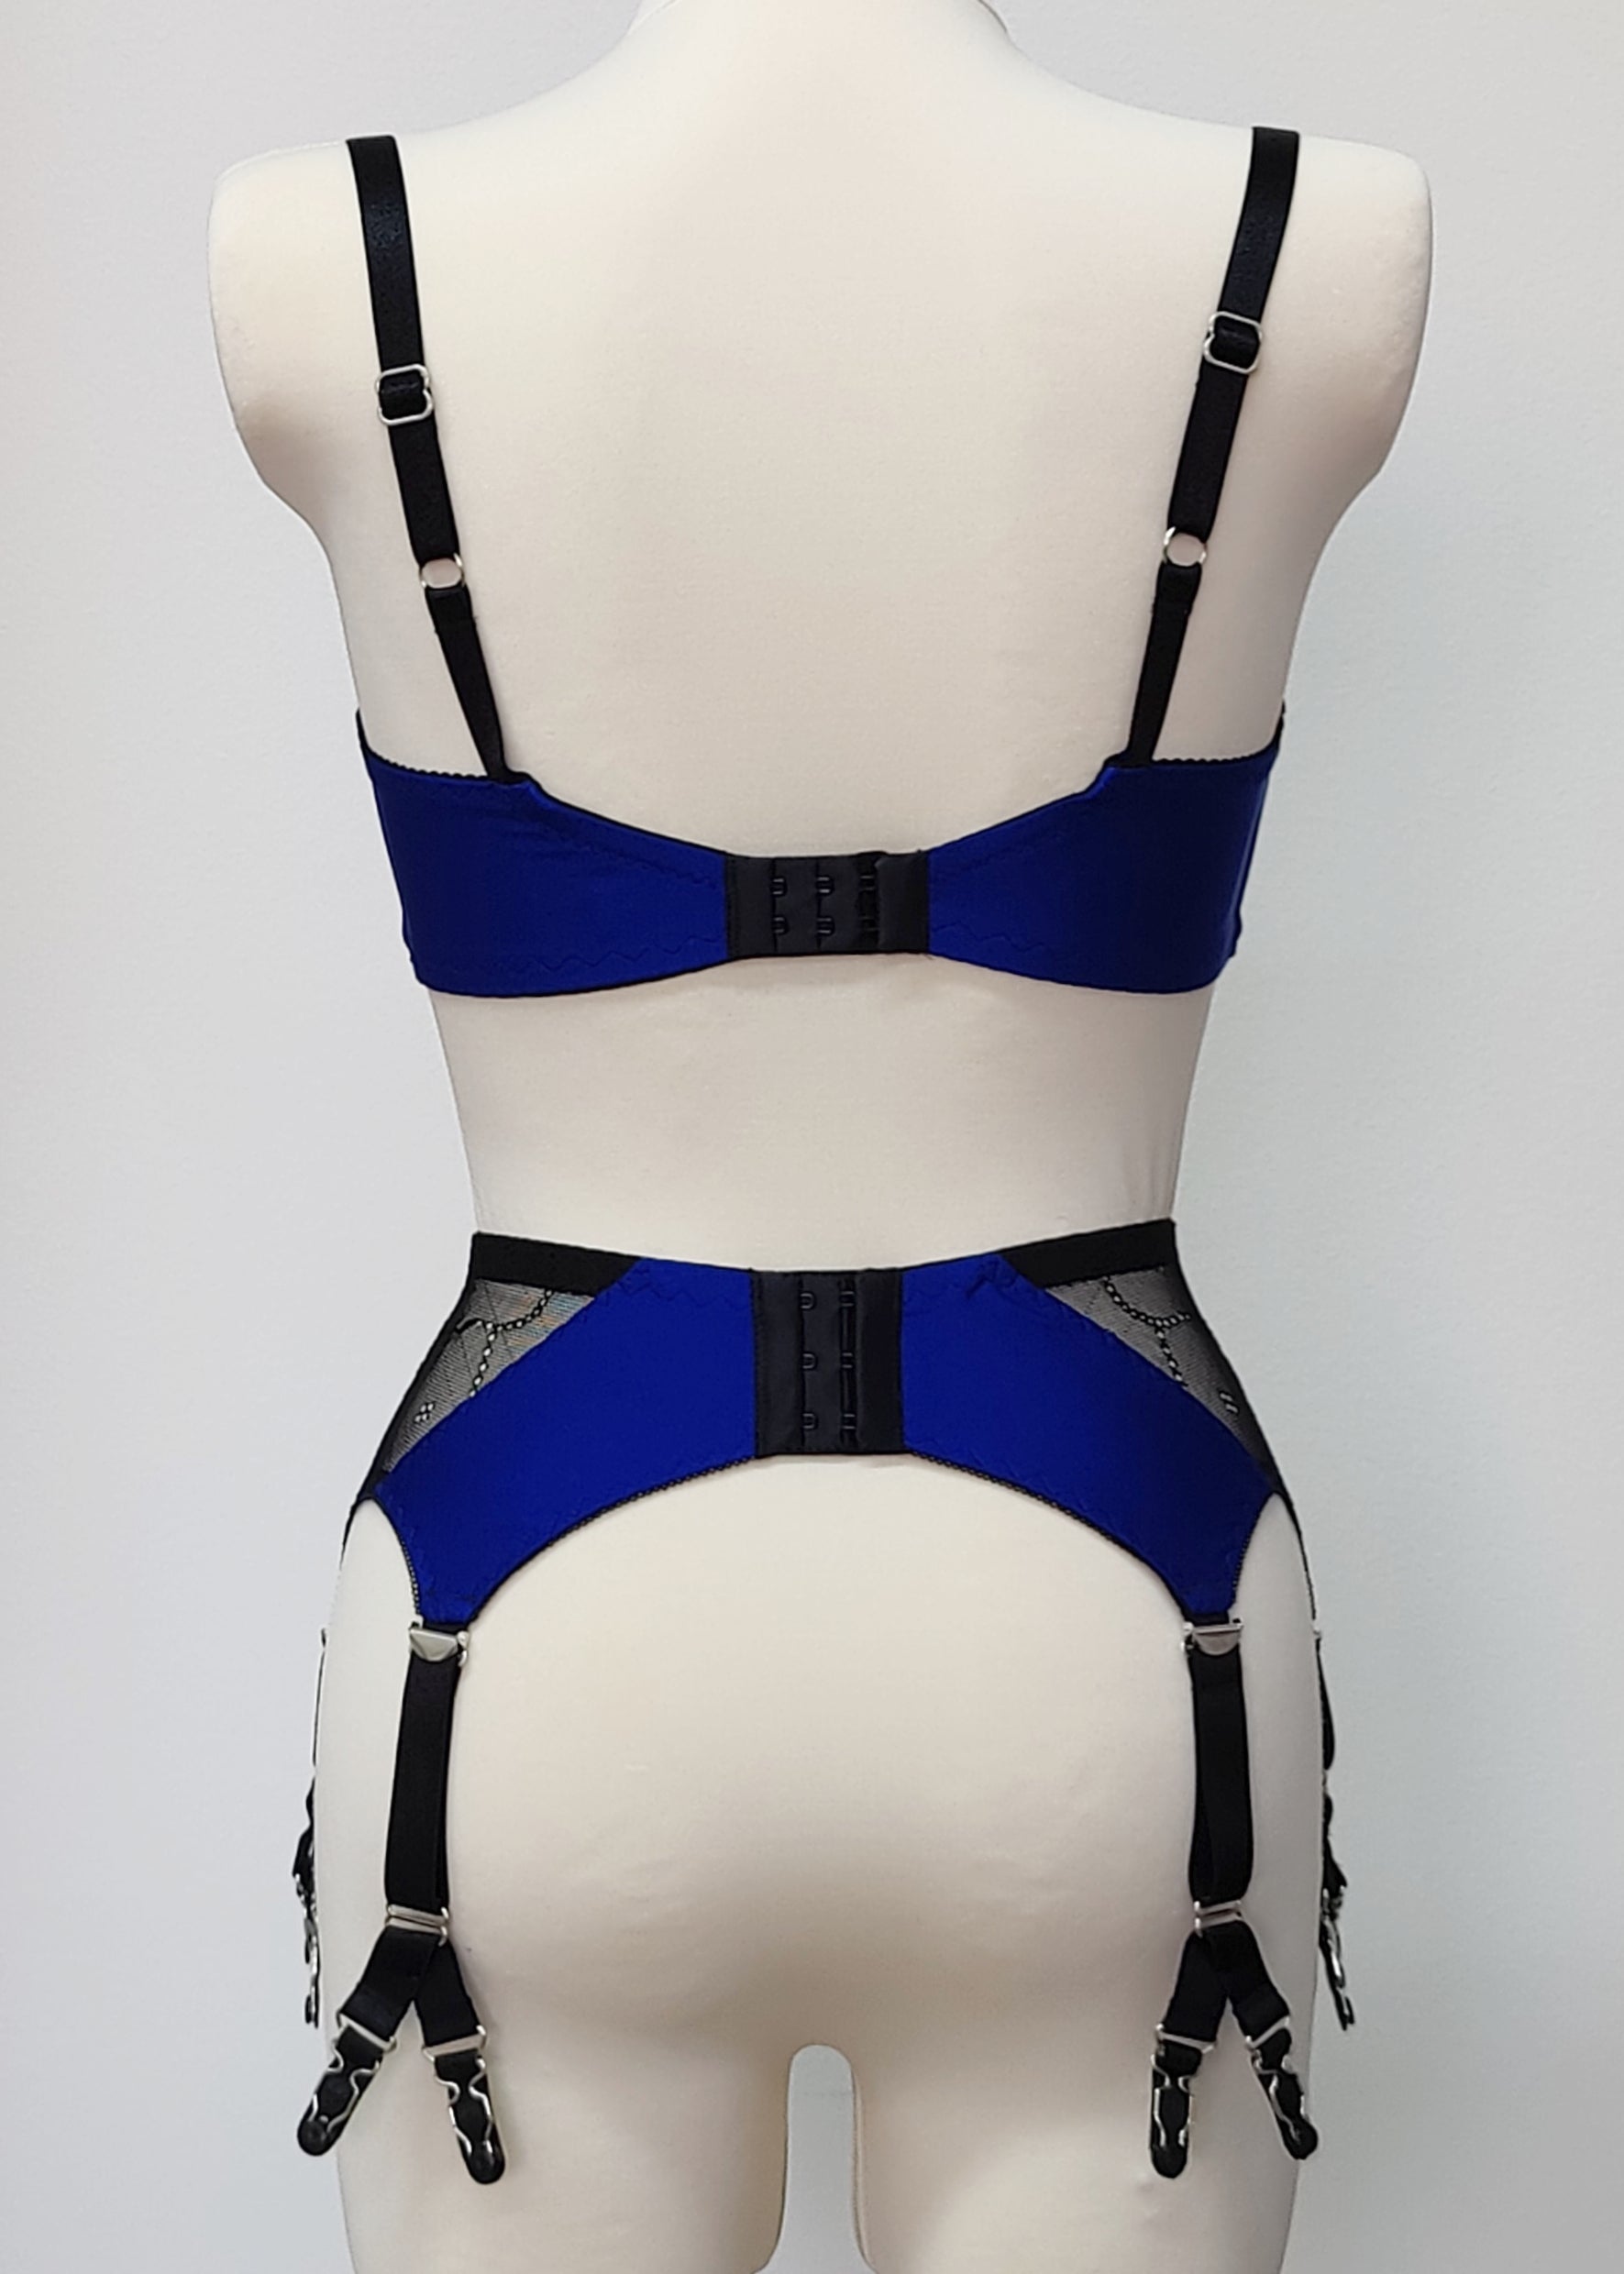 RITA Y-Strap Lace Garter belt – Coco'sRetroCloset